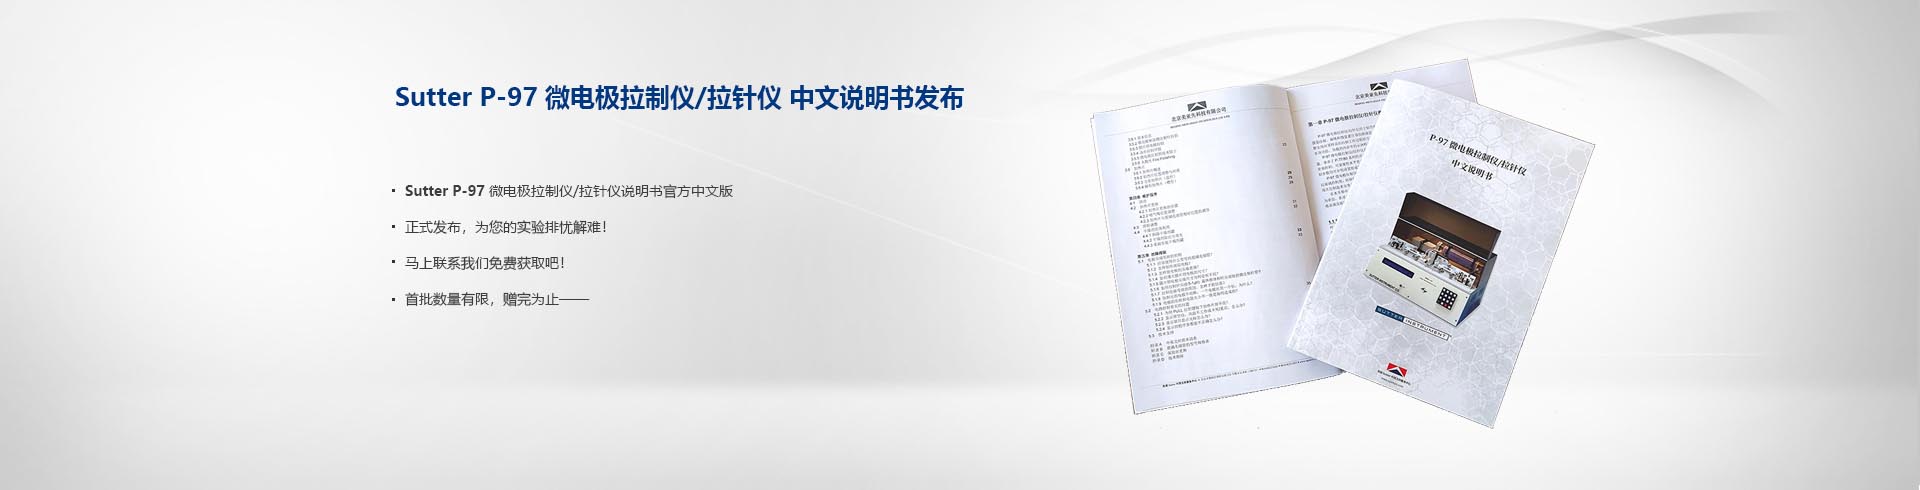 Sutter P-97 微电极拉制仪/拉针仪 中文说明书发布